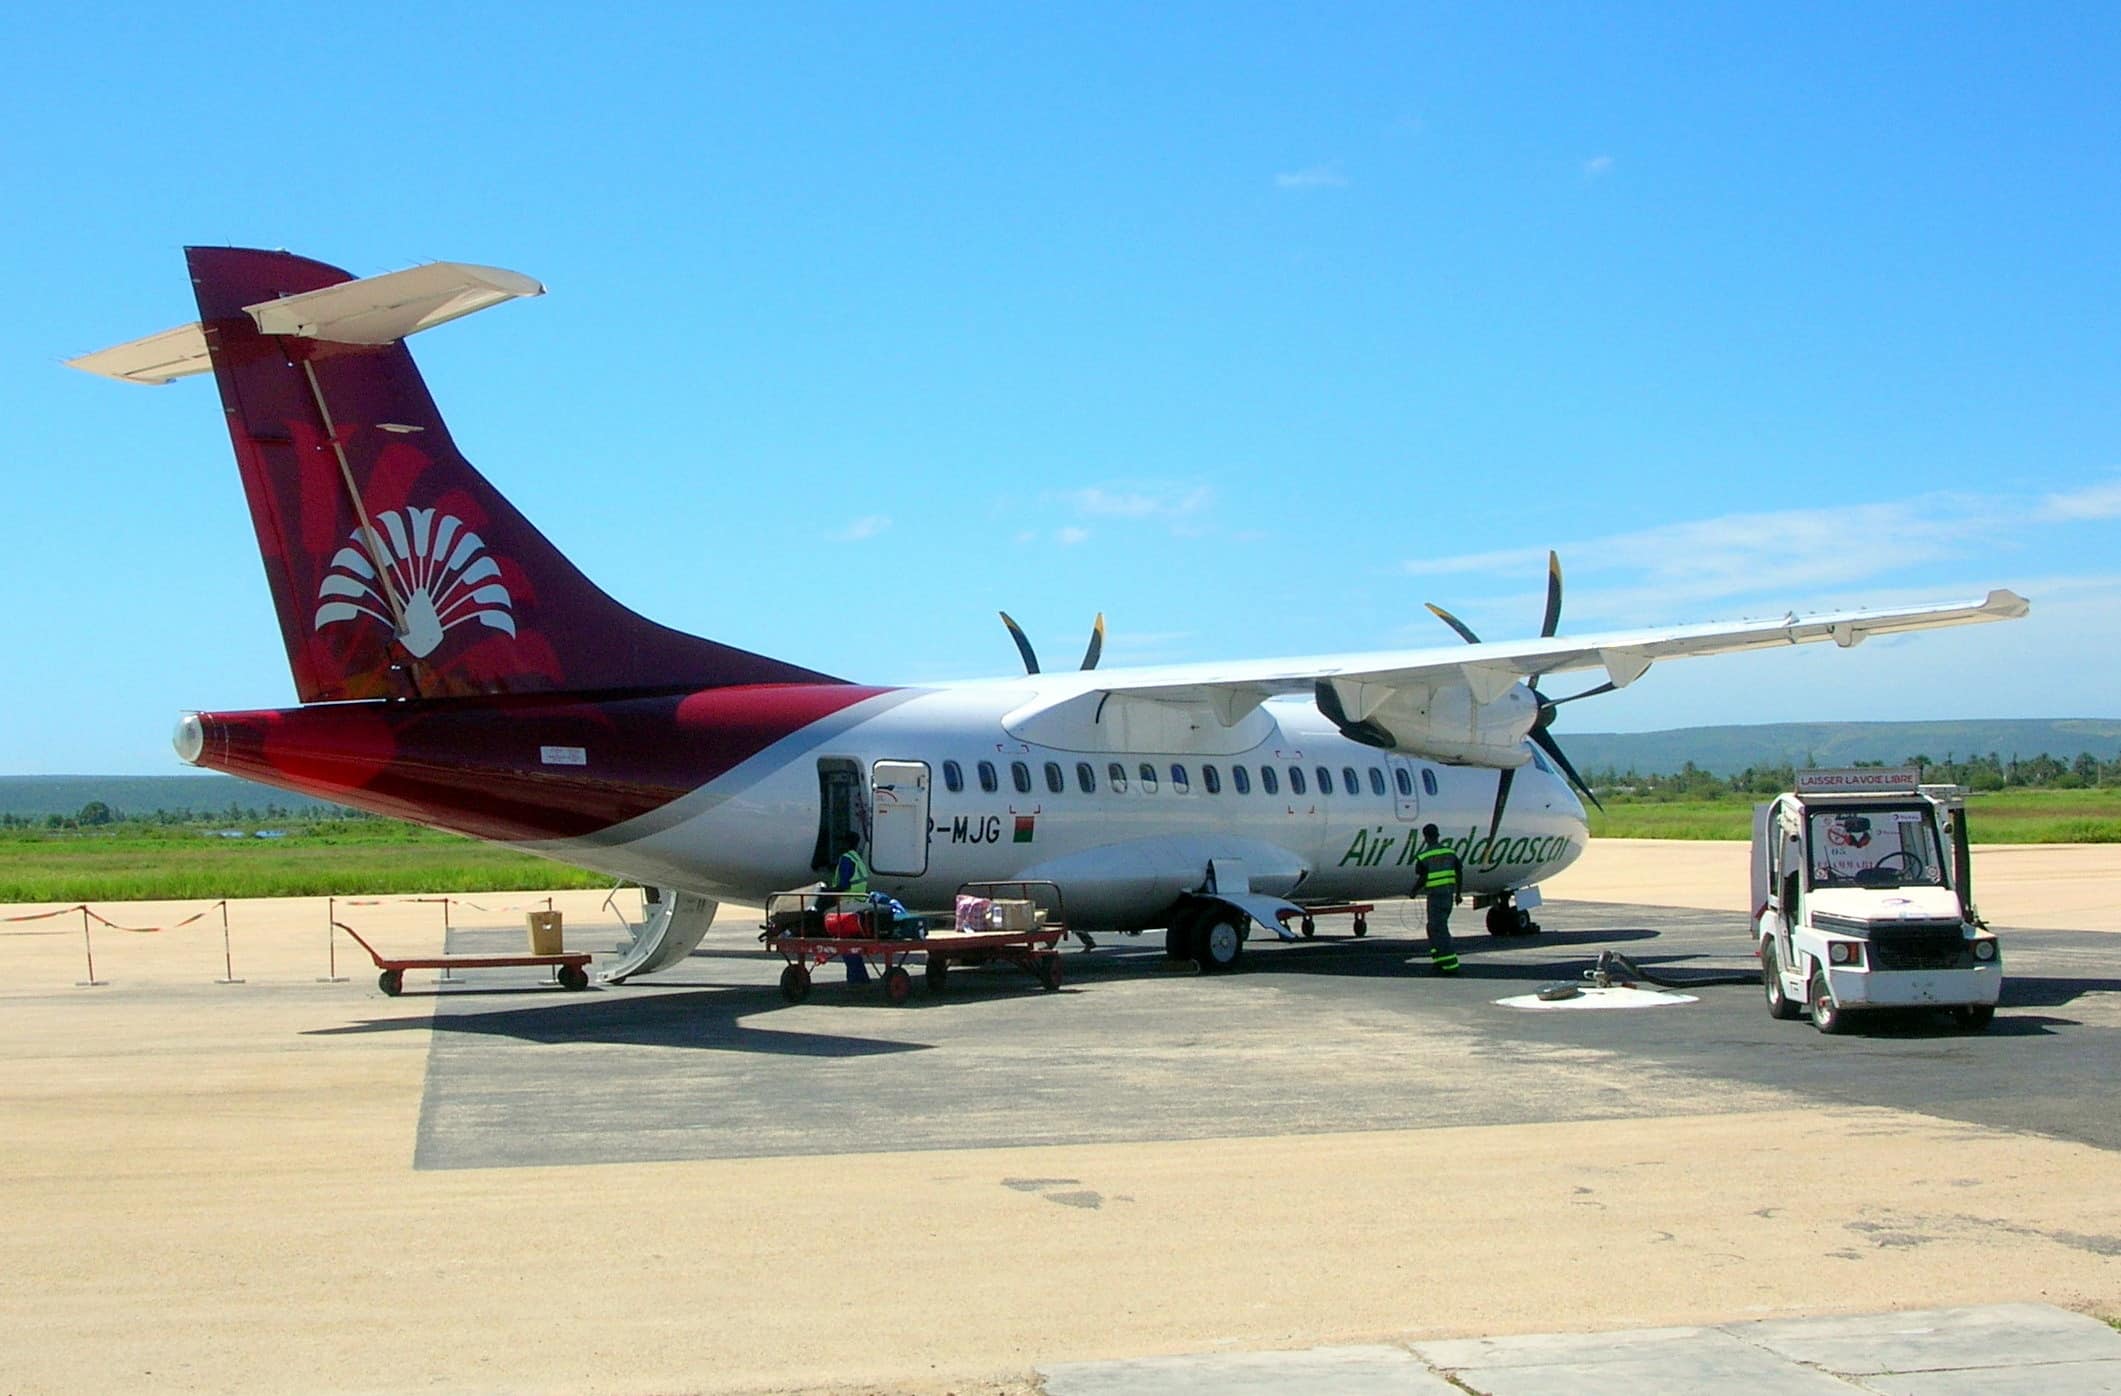 Air Madagascar : Une perte de 70 millions de dollars